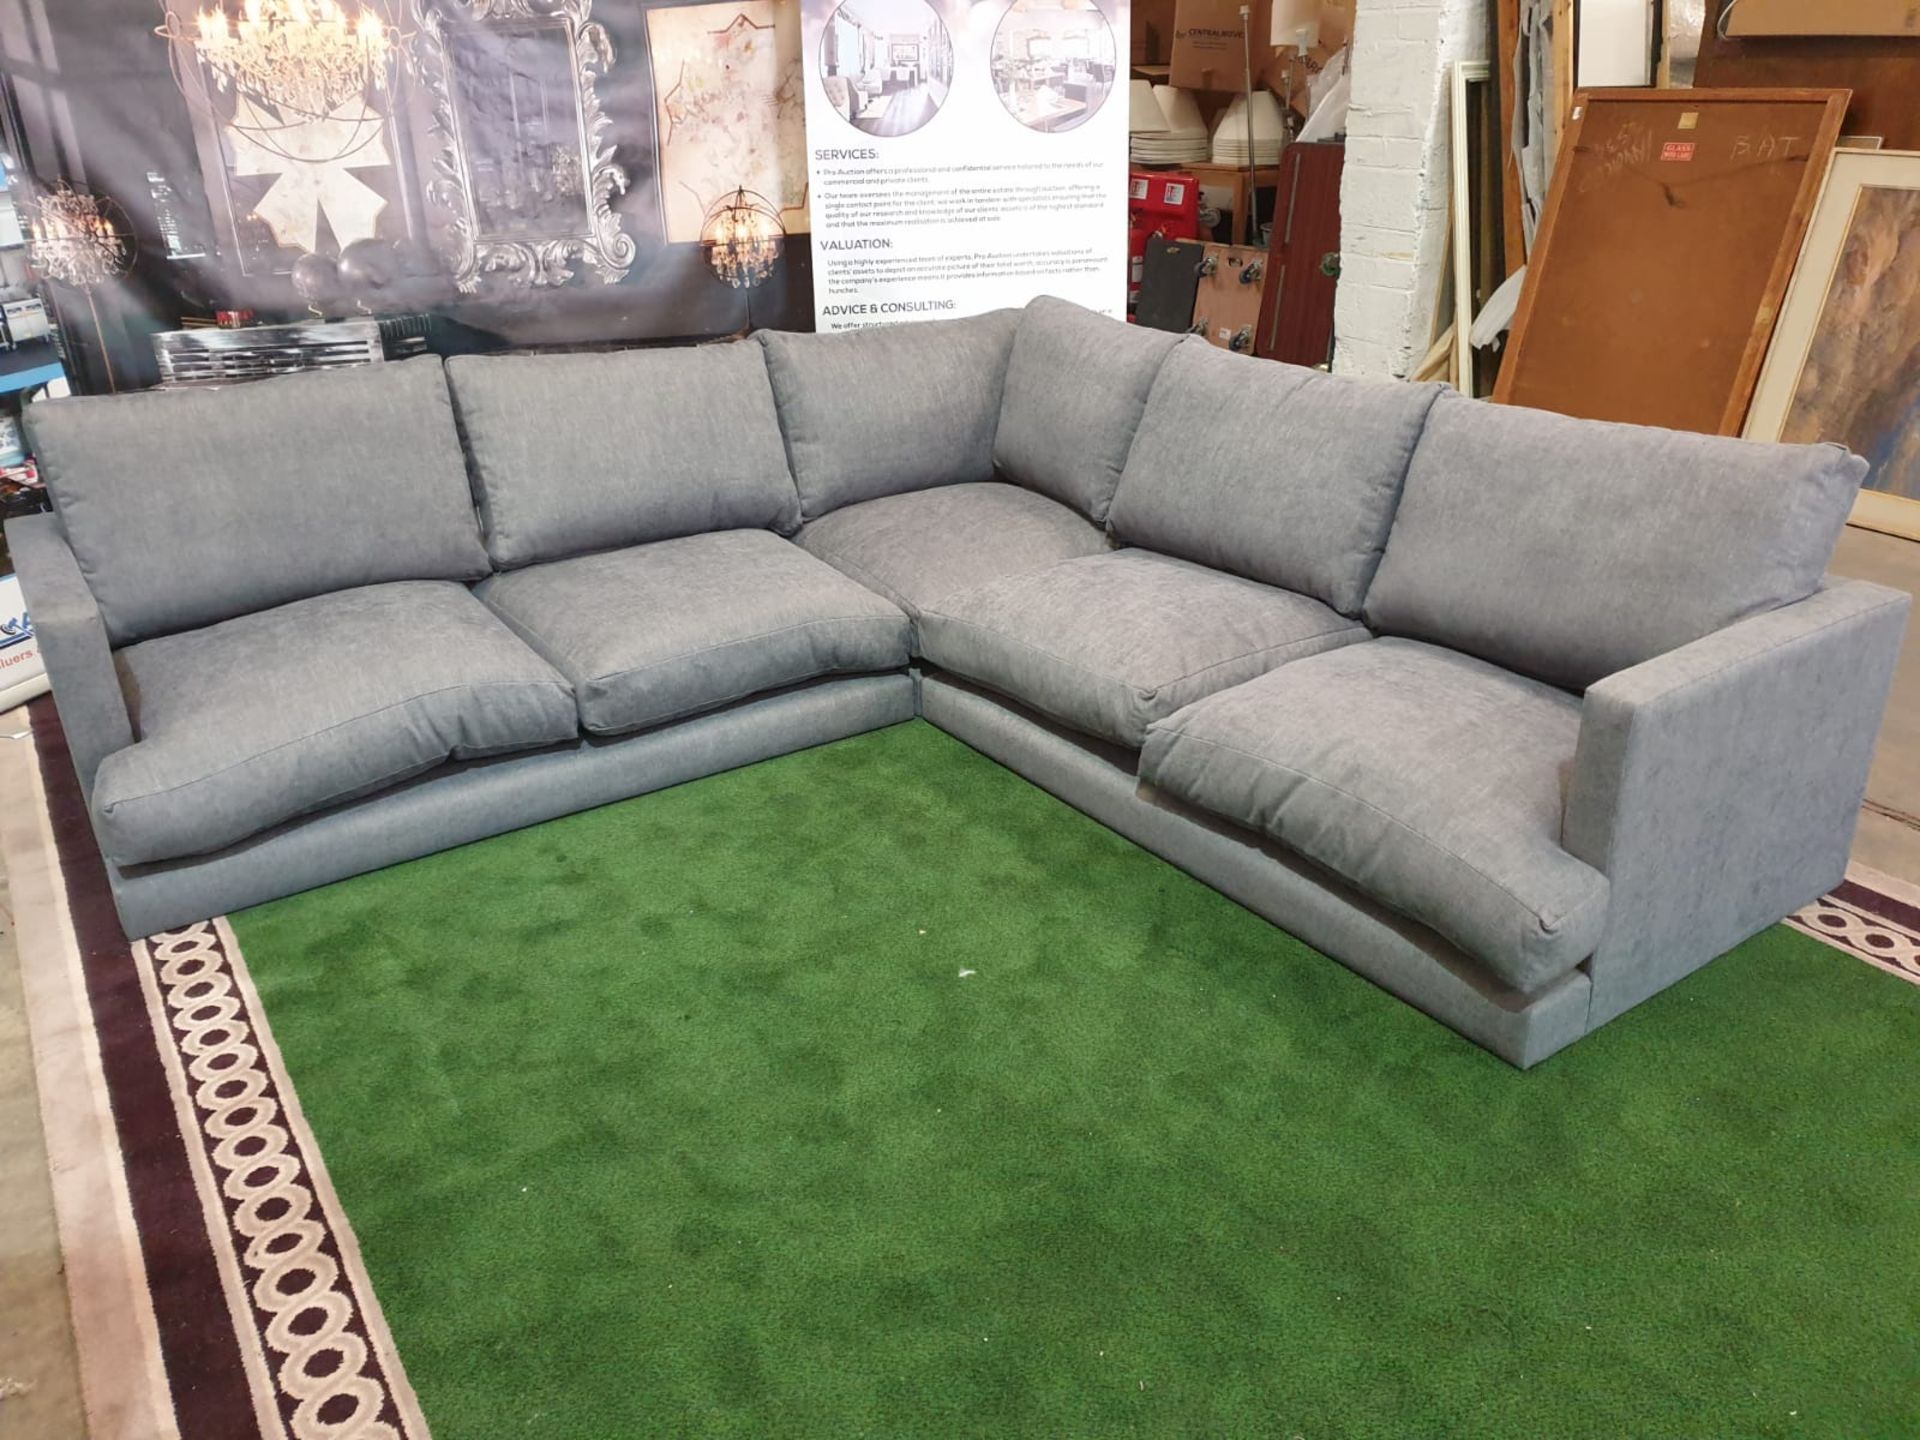 Midsomer Development Corner Sofa Suite Classic Grey Modern Elegance Is What The Midsomer Stands